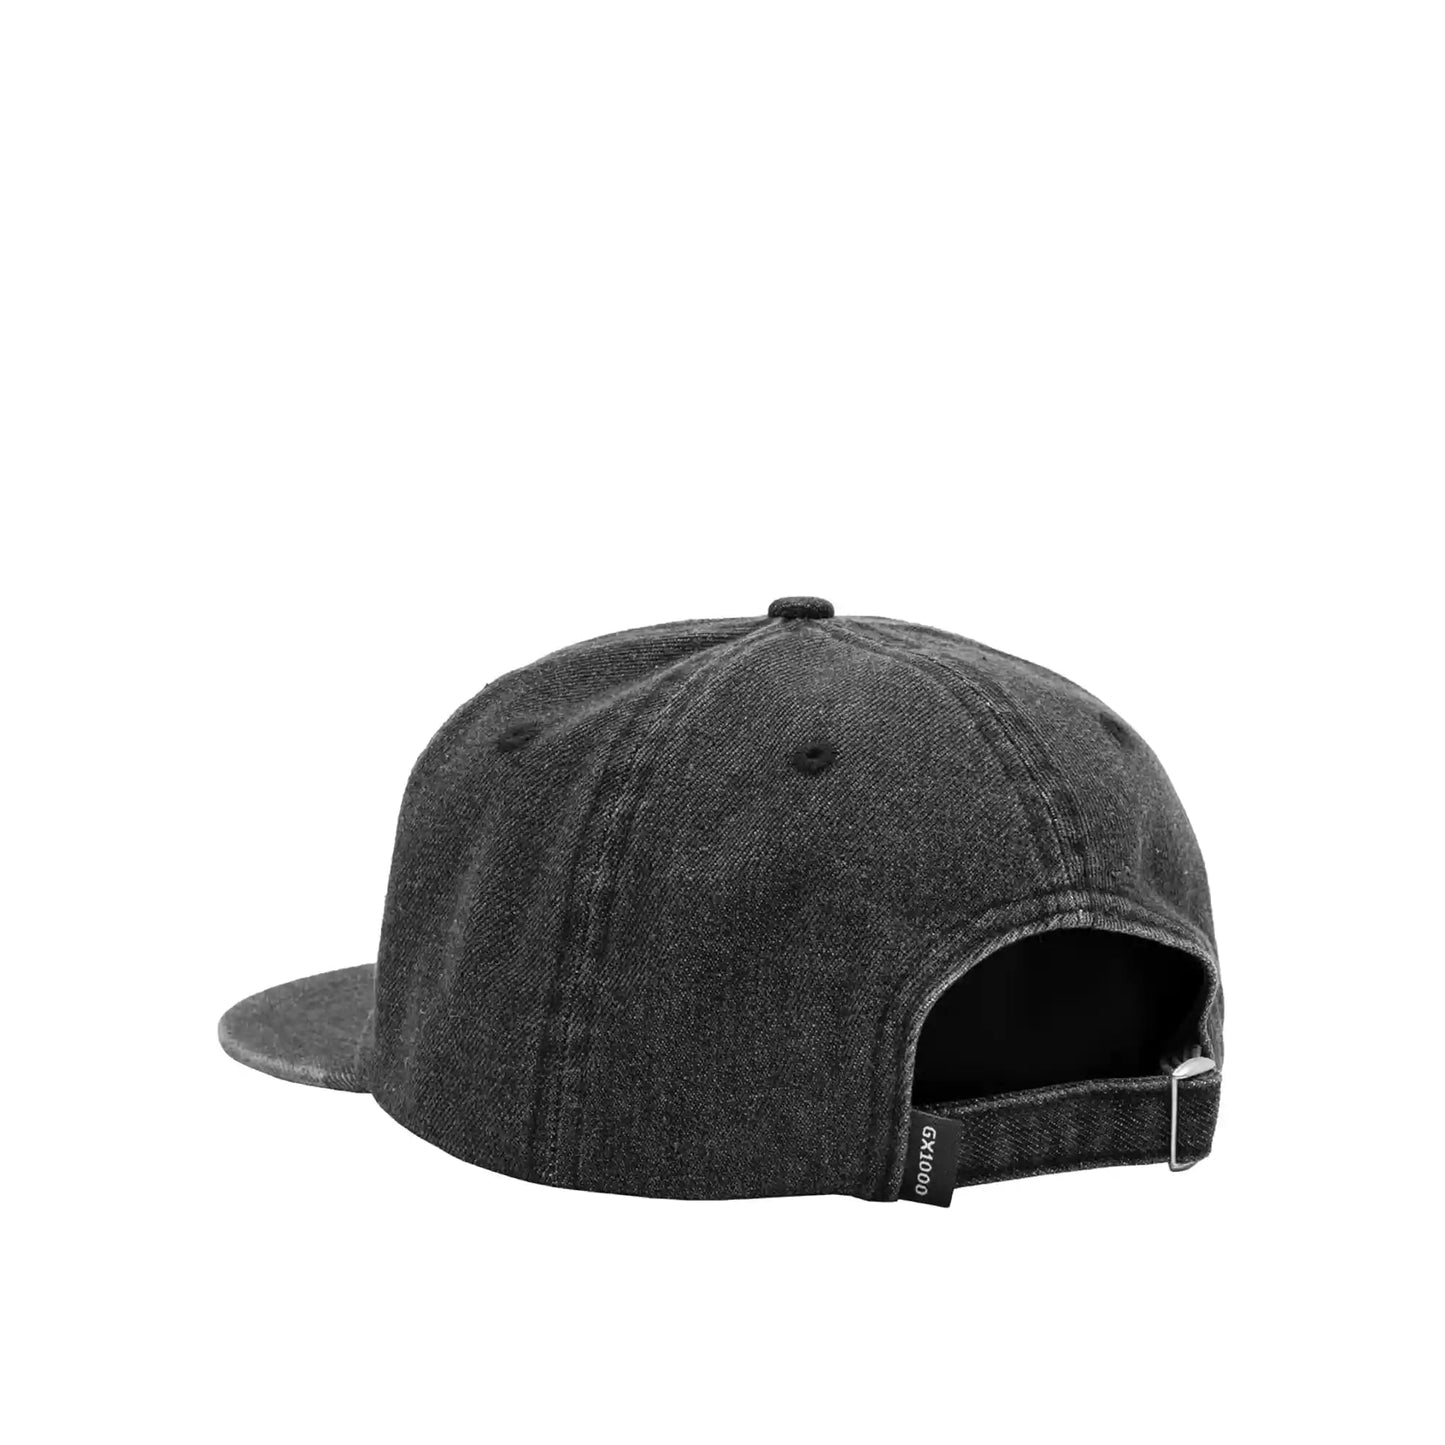 GX1000 Tag Hat, black wash - Tiki Room Skateboards - 2